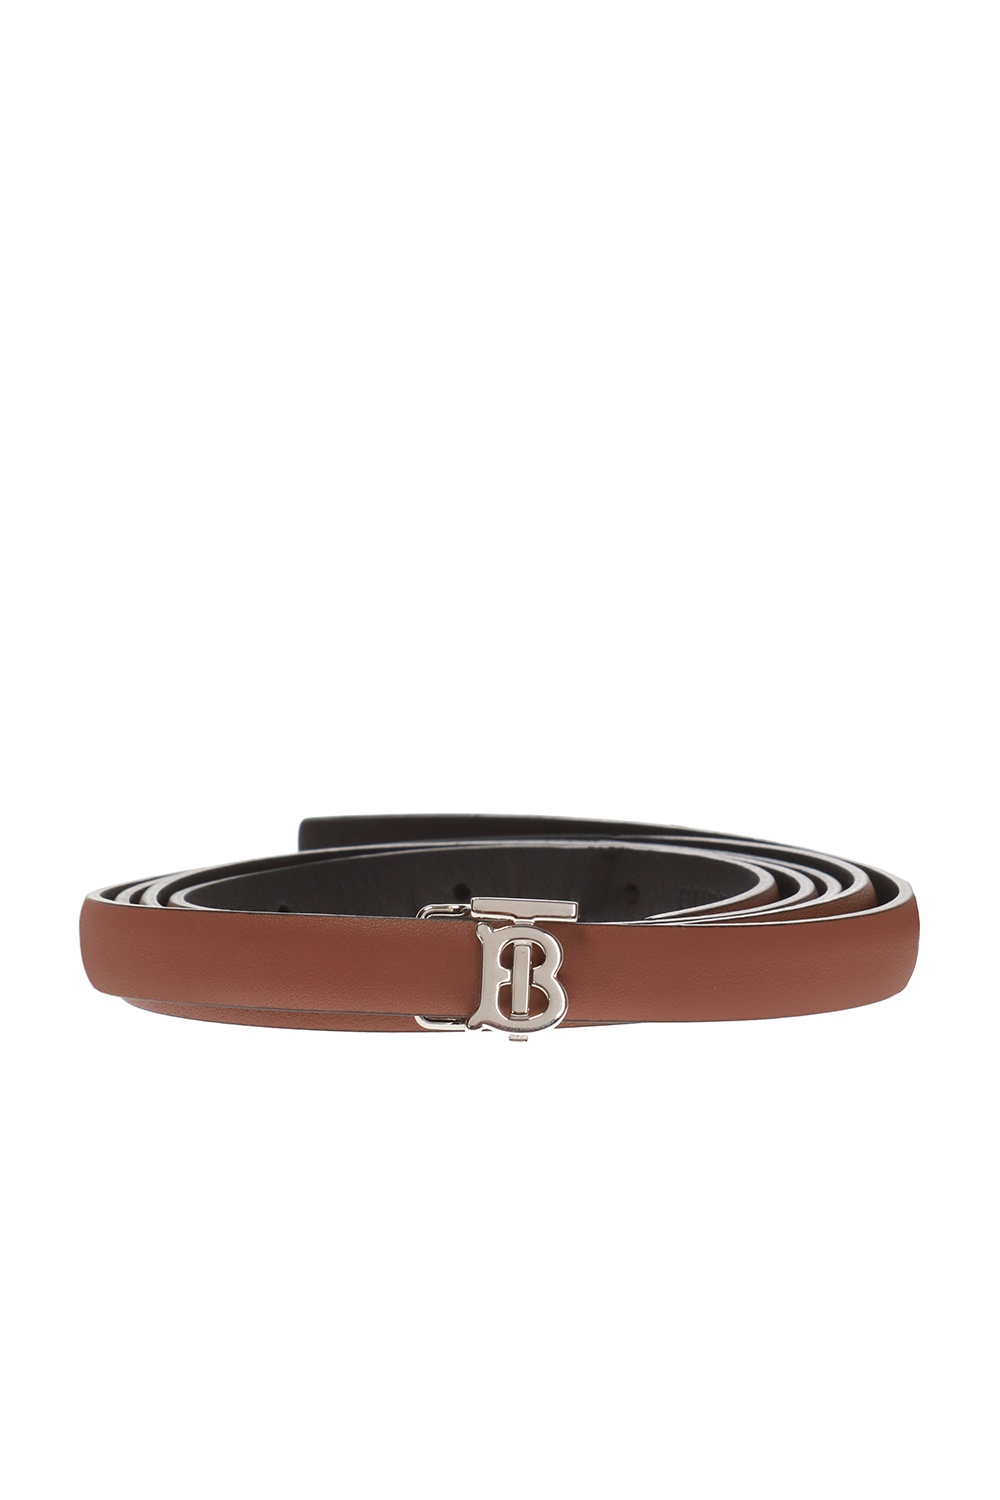 Burberry Reversible Monogram Leather Belt